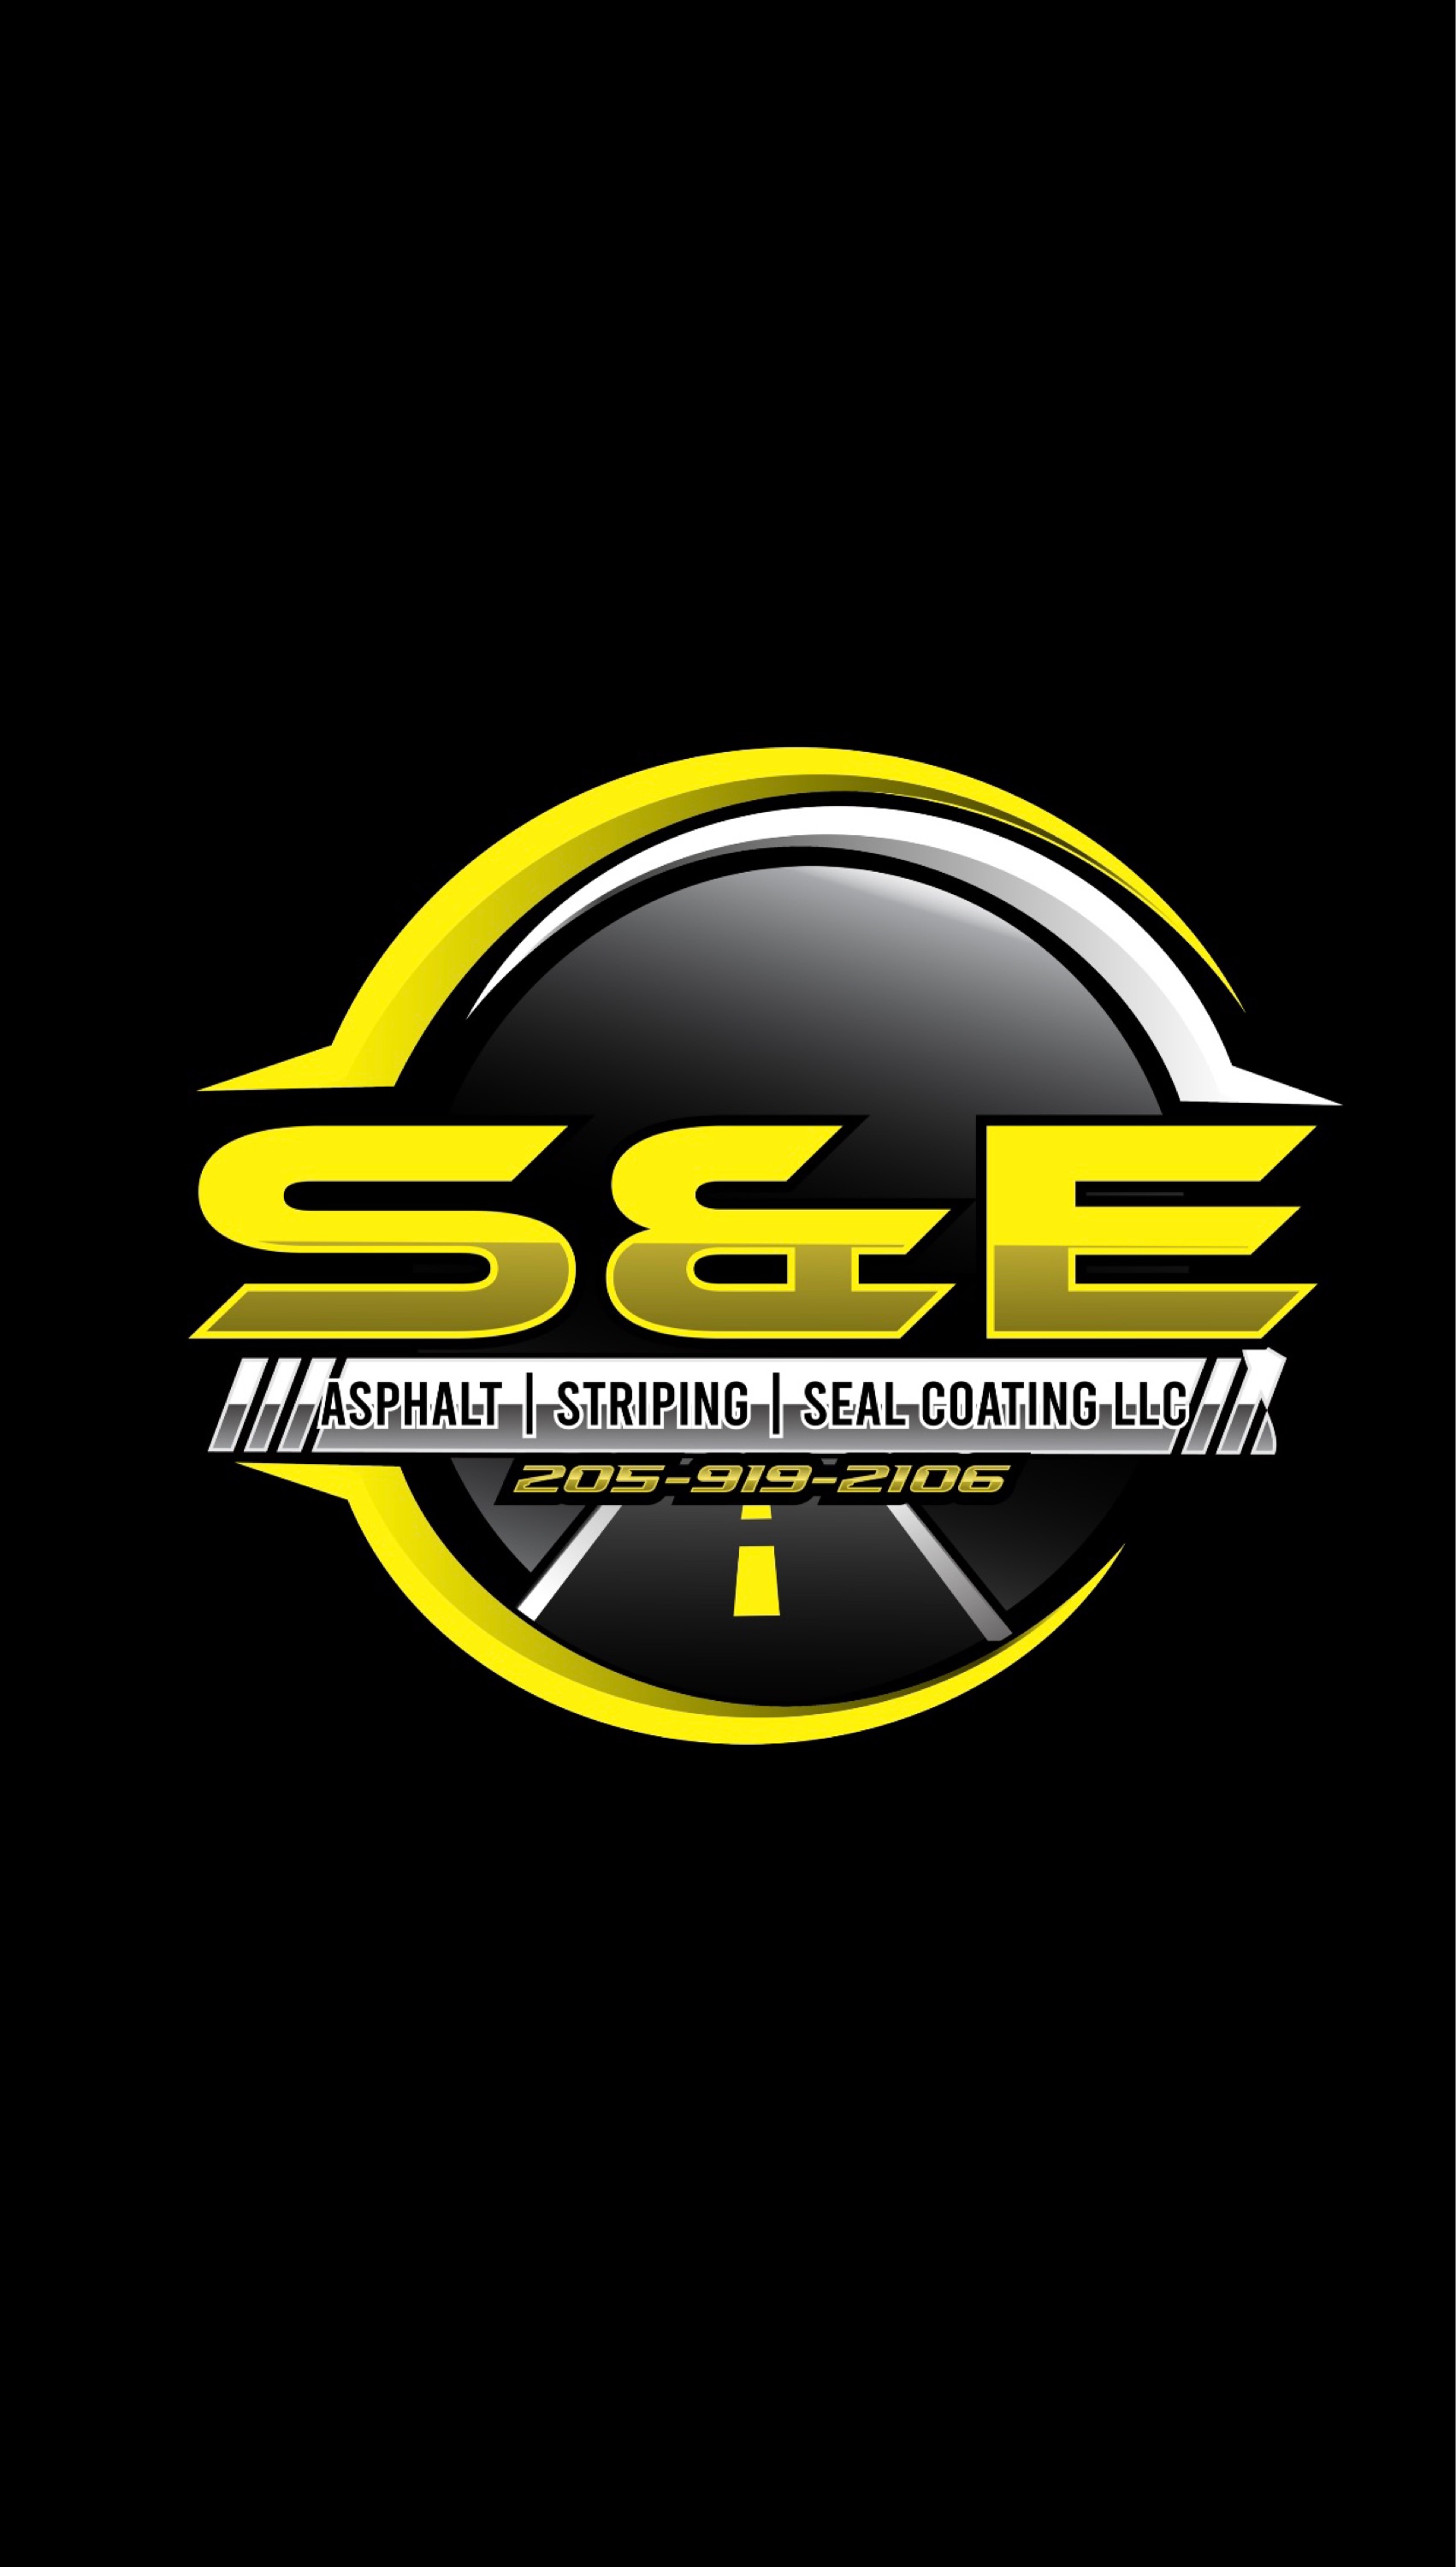 S & E Asphalt, Striping, Seal Coating Logo